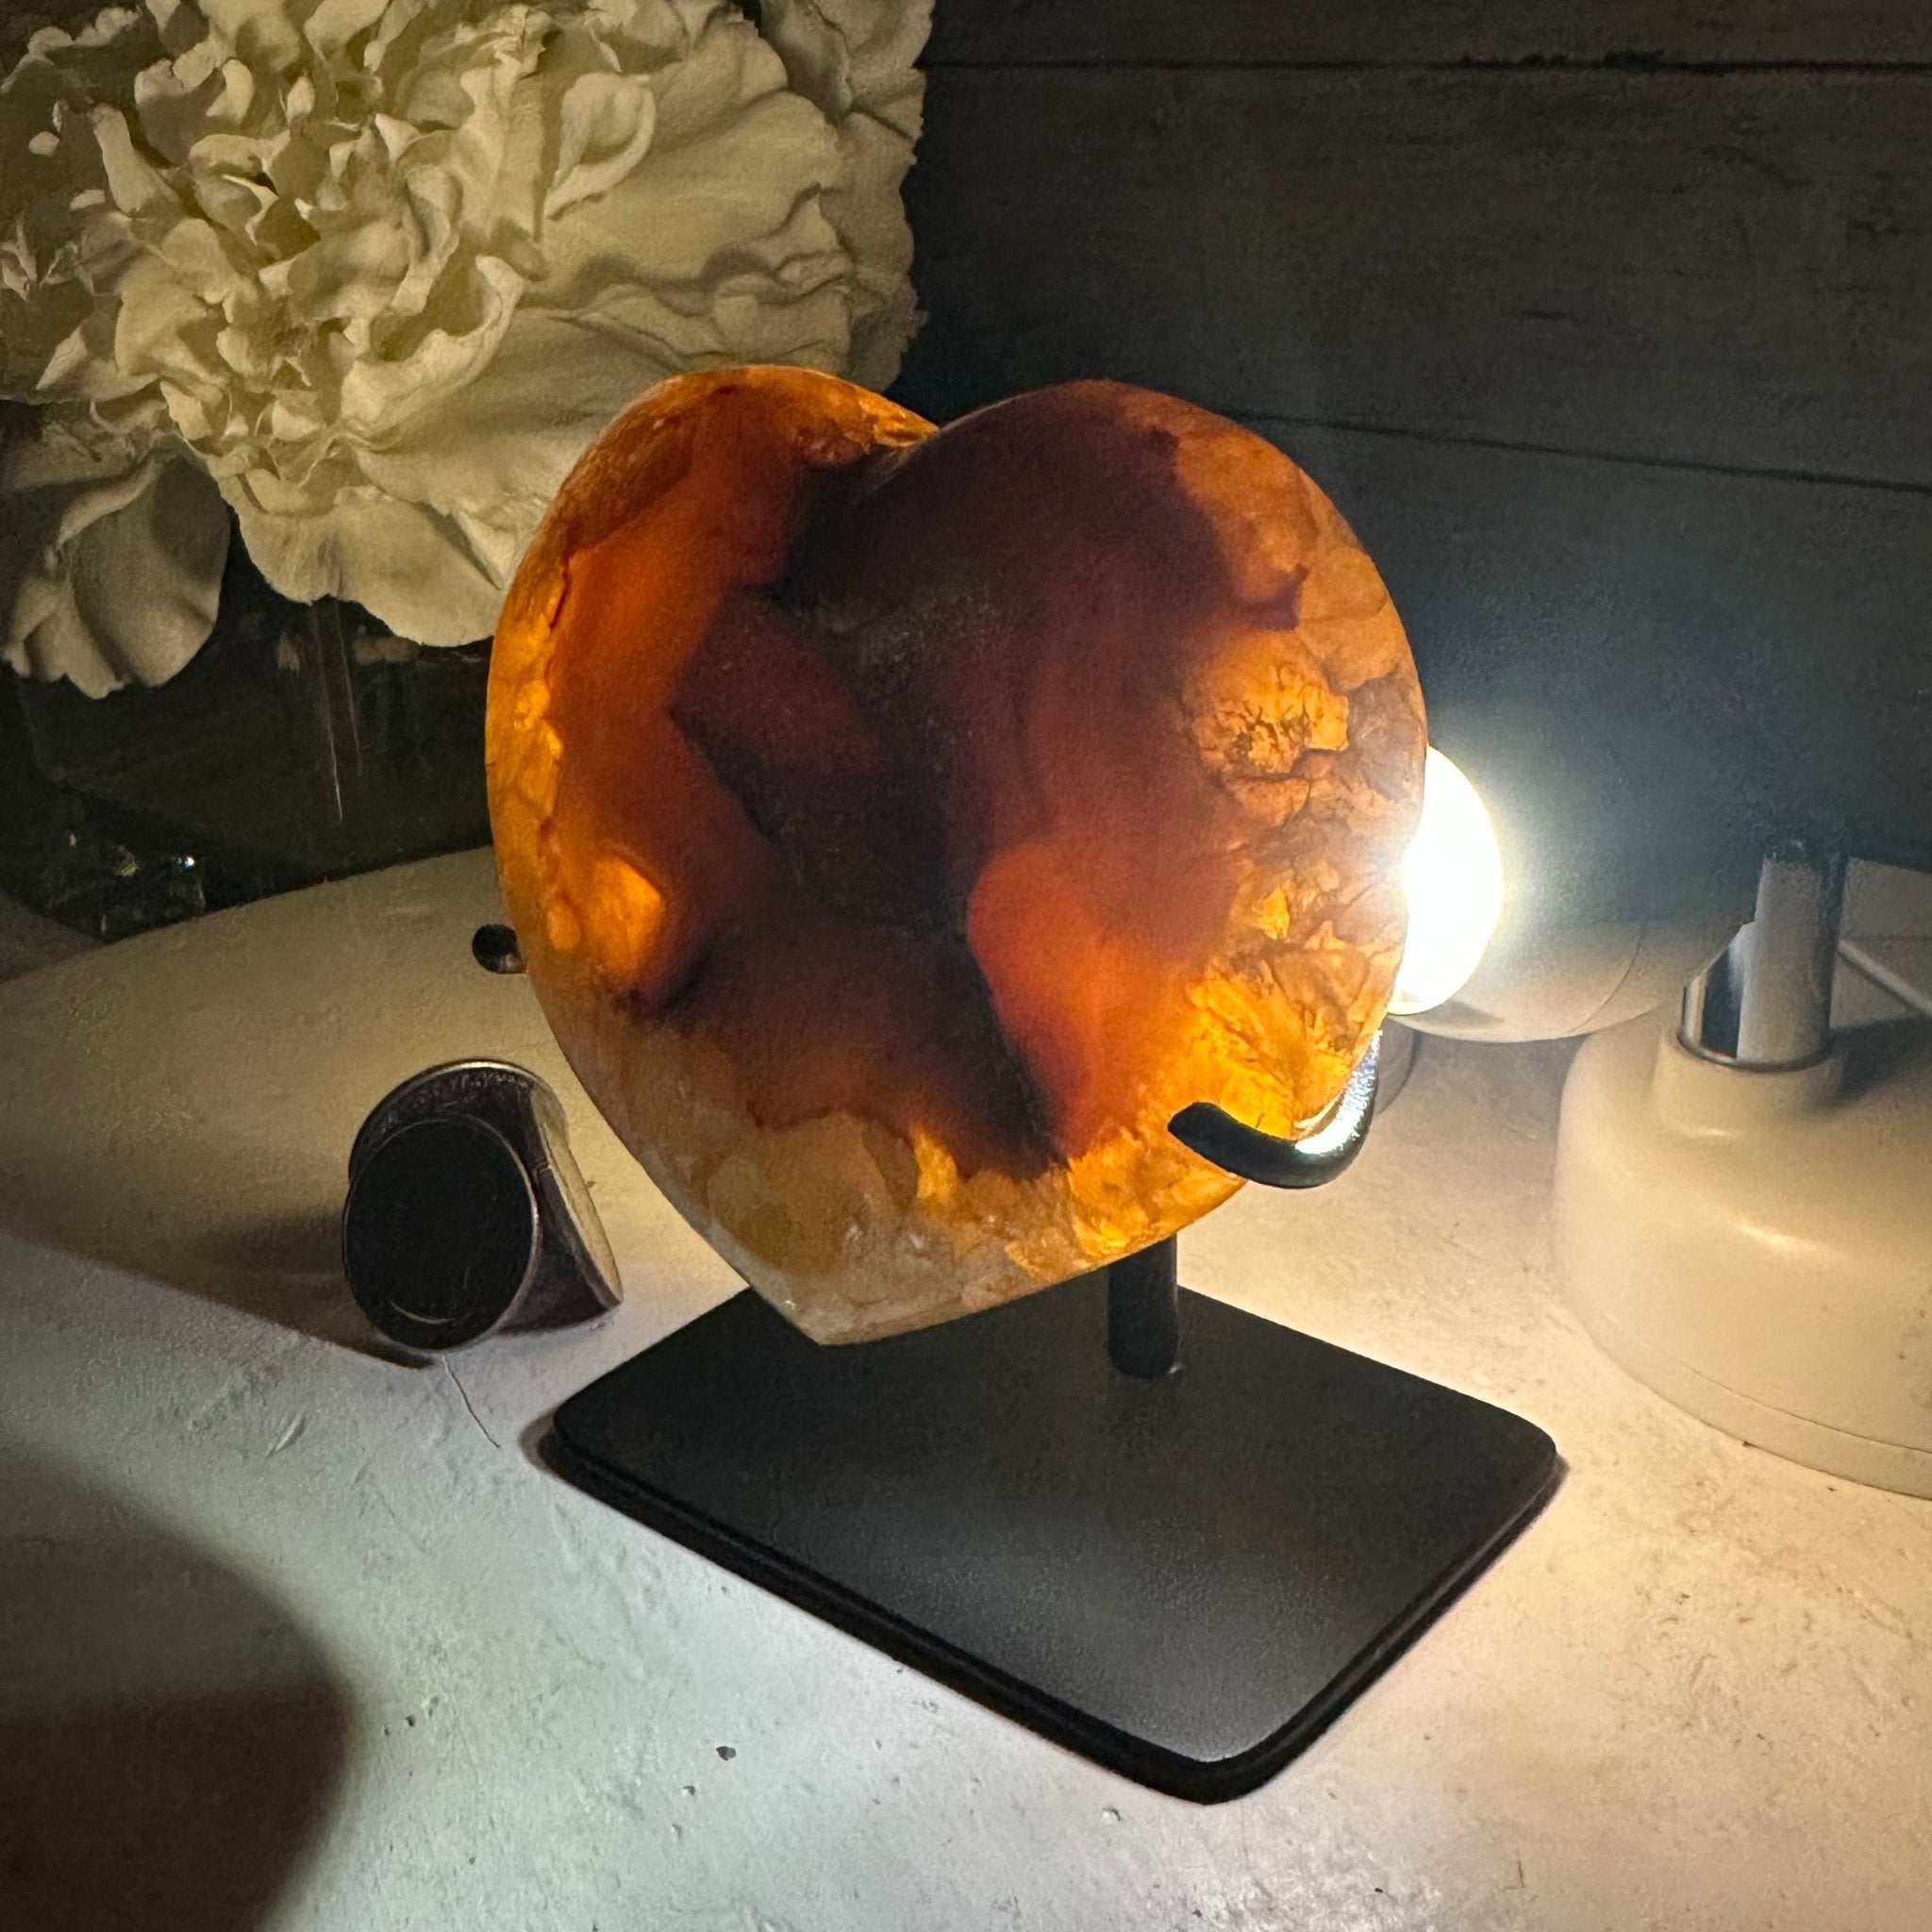 Polished Agate Heart Geode on a Metal Stand, 1.1 lbs & 4" Tall, Model #5468-0021 by Brazil Gems - Brazil GemsBrazil GemsPolished Agate Heart Geode on a Metal Stand, 1.1 lbs & 4" Tall, Model #5468-0021 by Brazil GemsHearts5468-0021